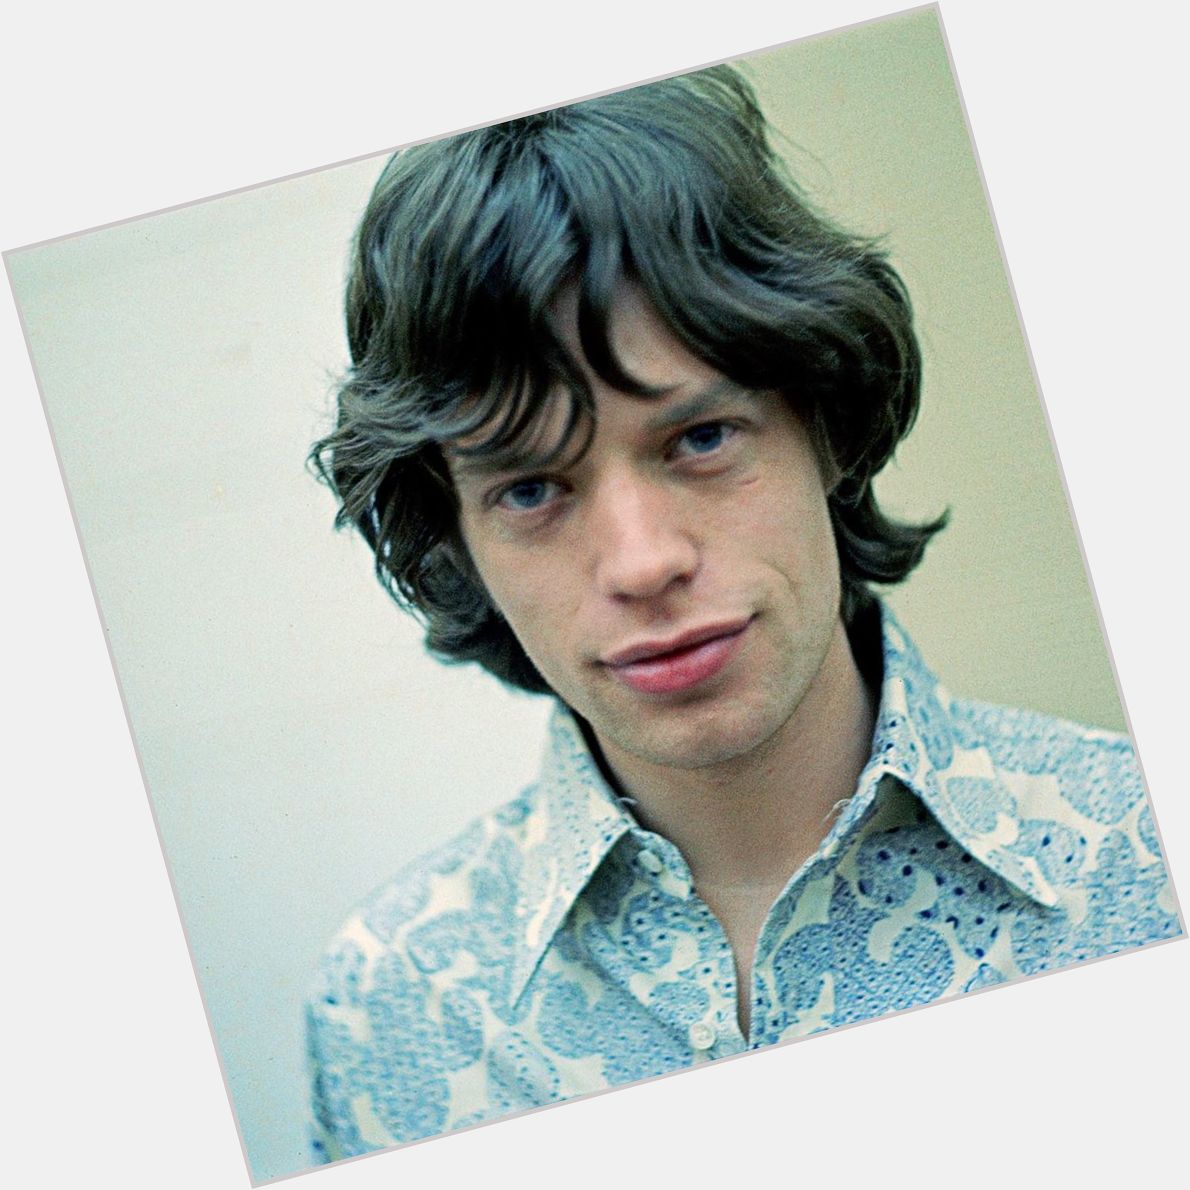 Wishing Mick Jagger a very Happy 77th Birthday!  